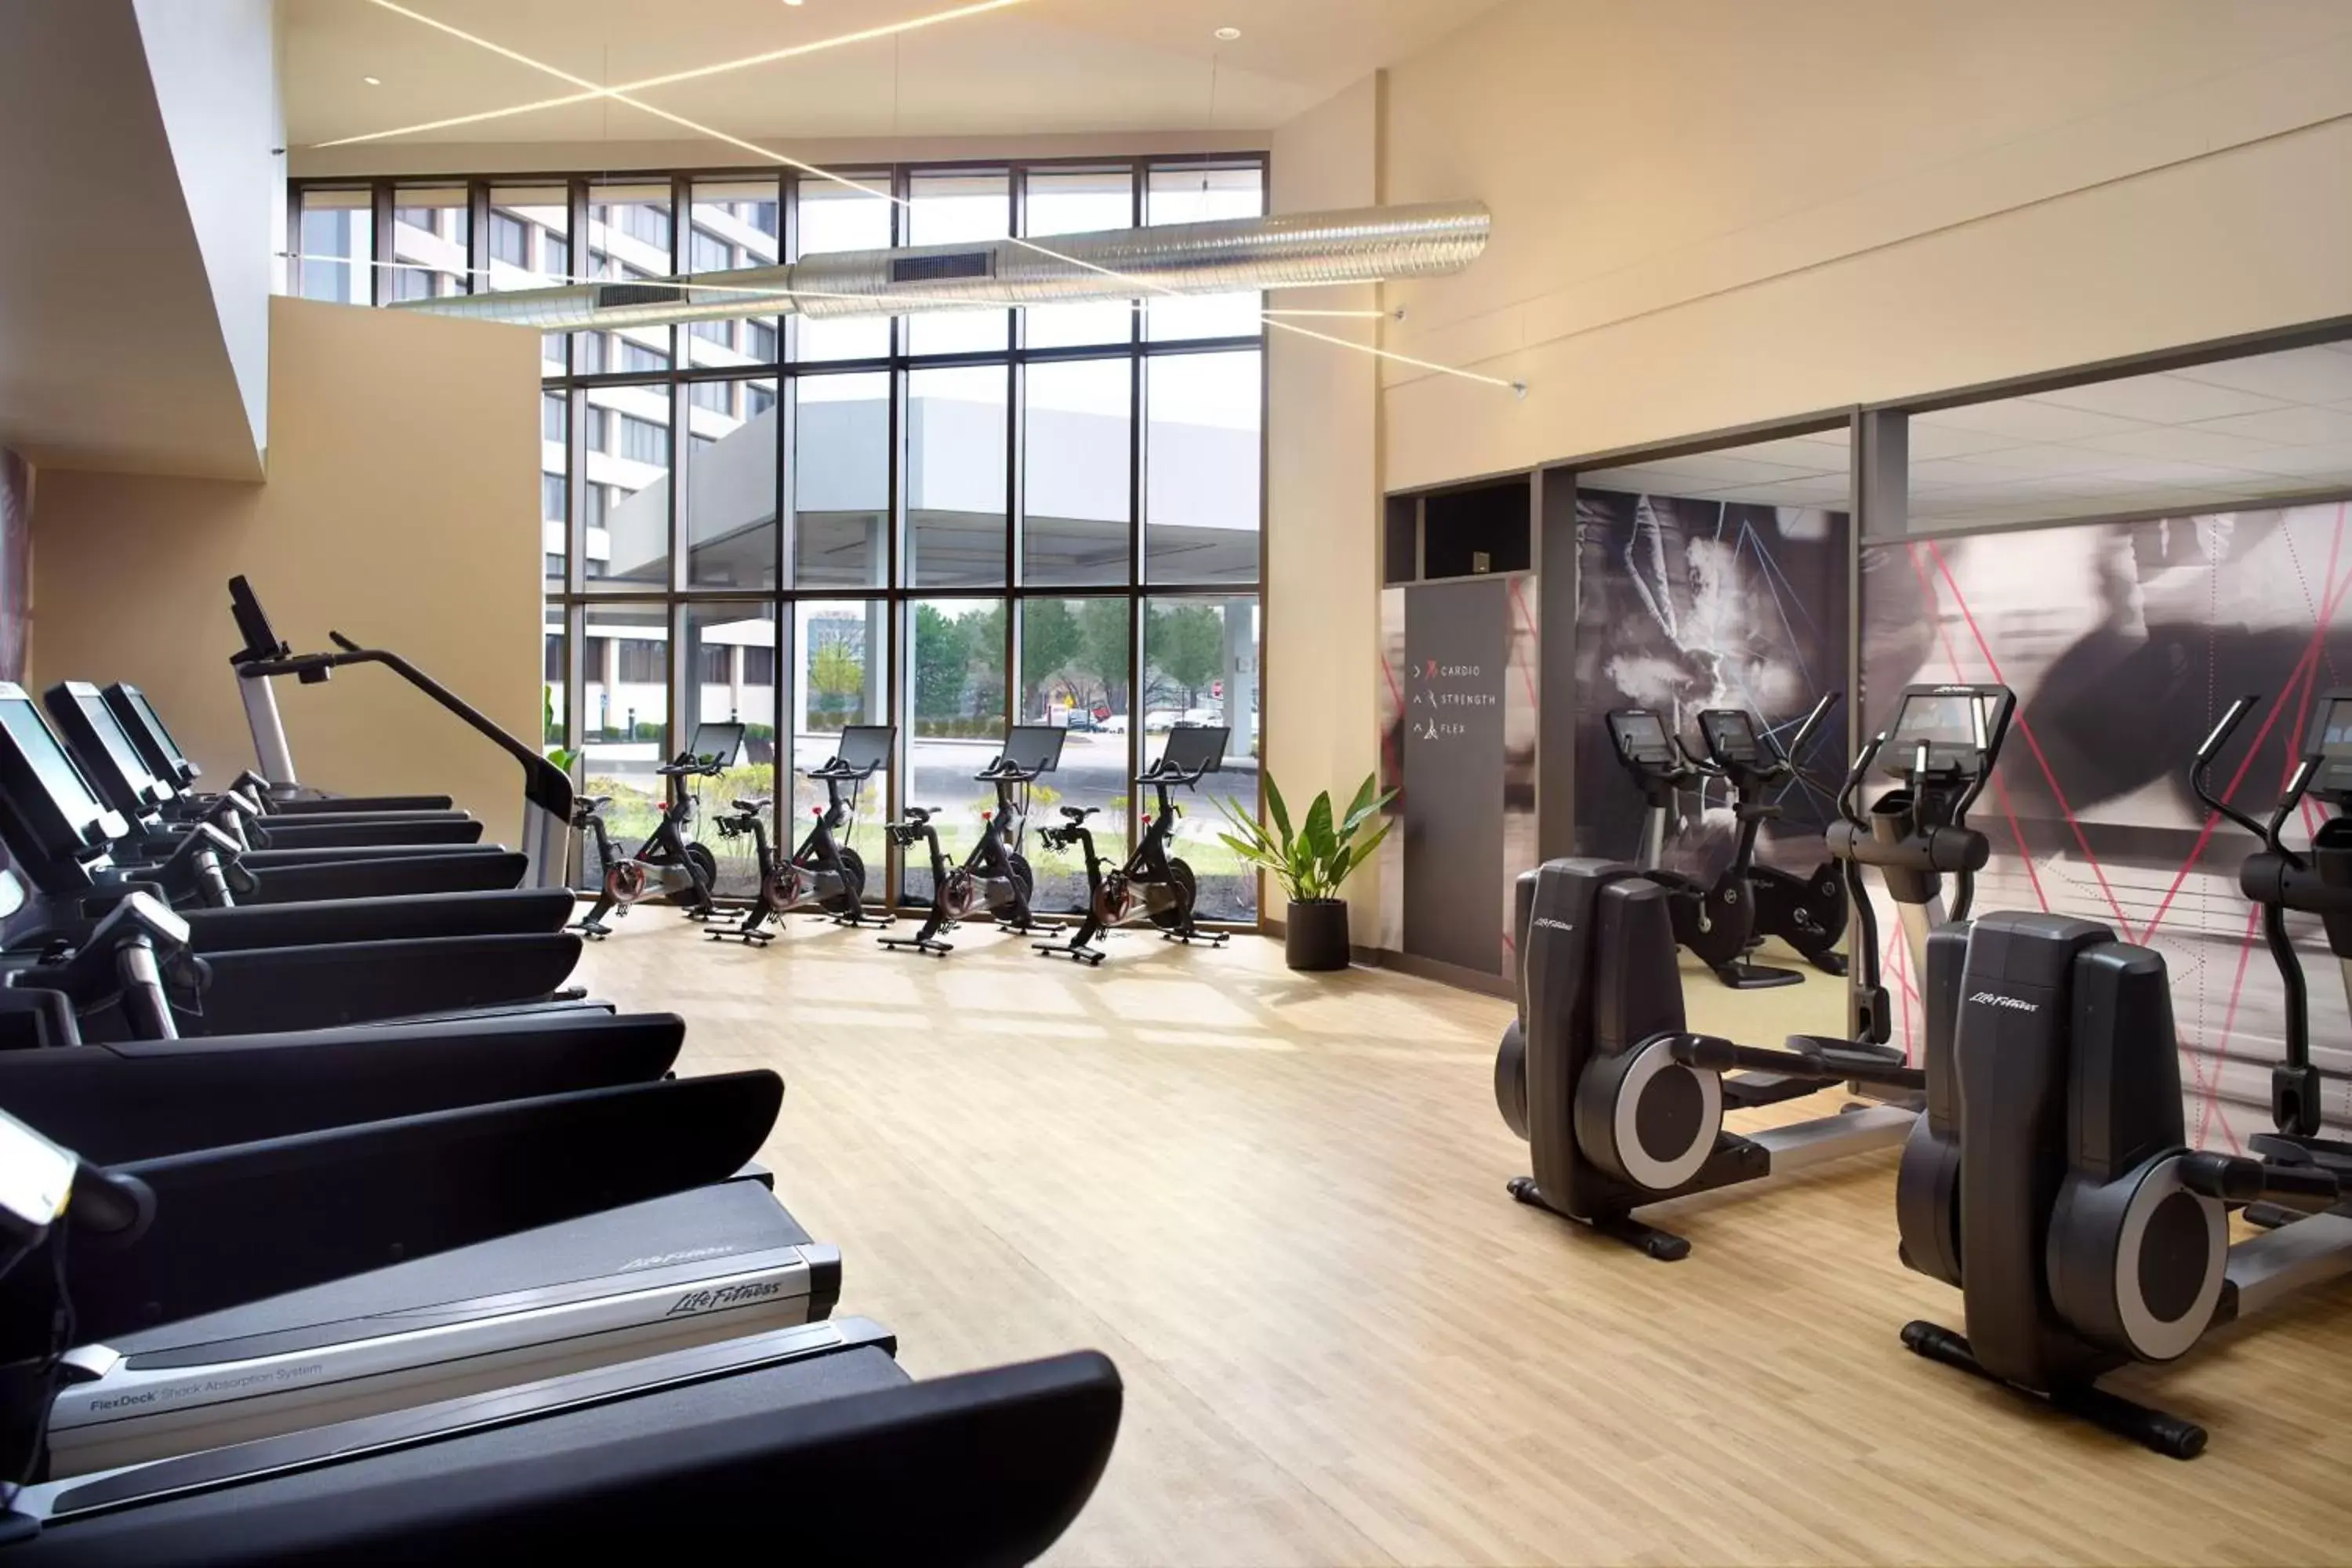 Fitness centre/facilities, Fitness Center/Facilities in Marriott Kansas City Overland Park